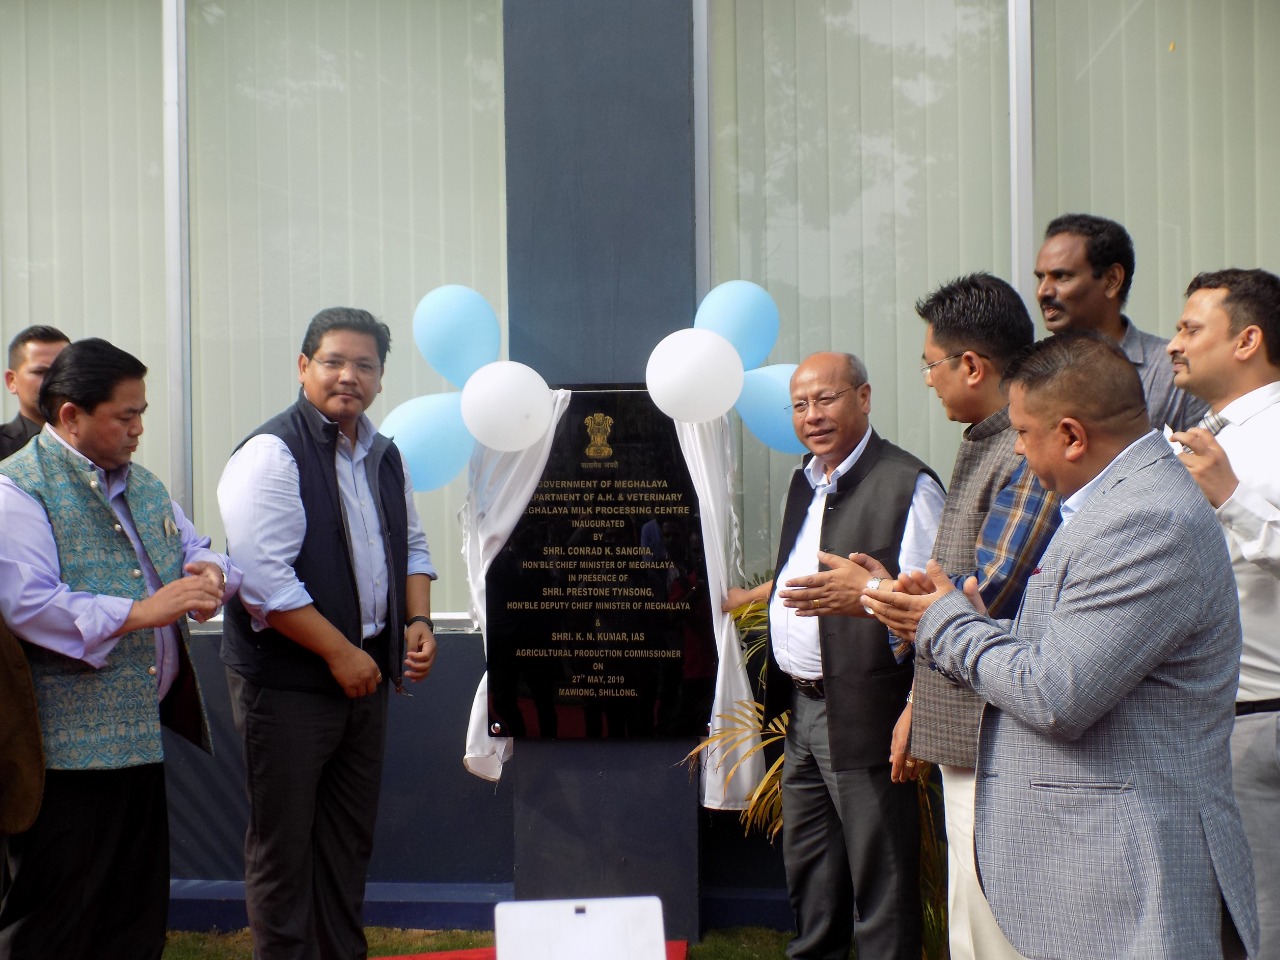 Inauguration of the Meghalaya Milk Processing Centre